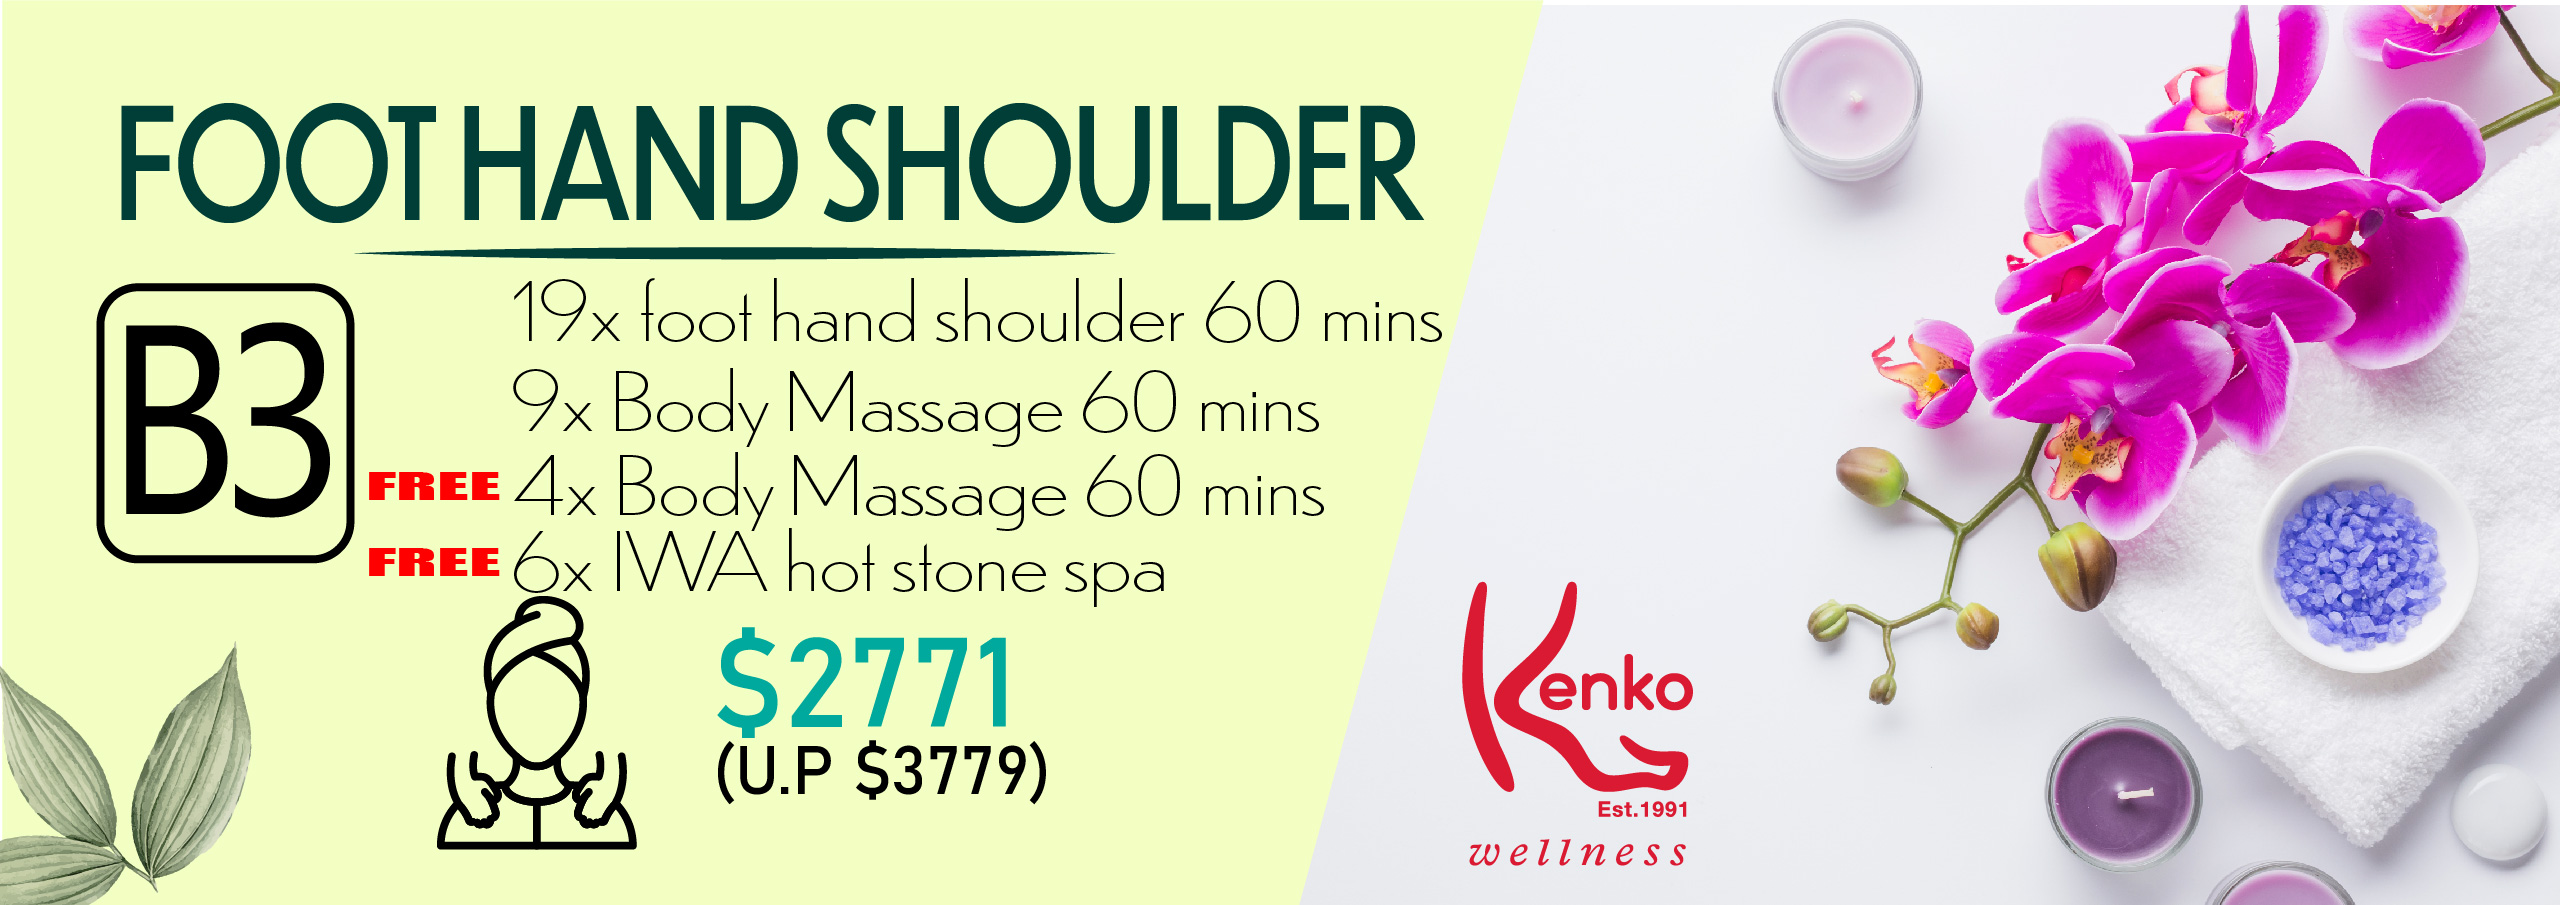 Permium foot hand shoulder massage kenko